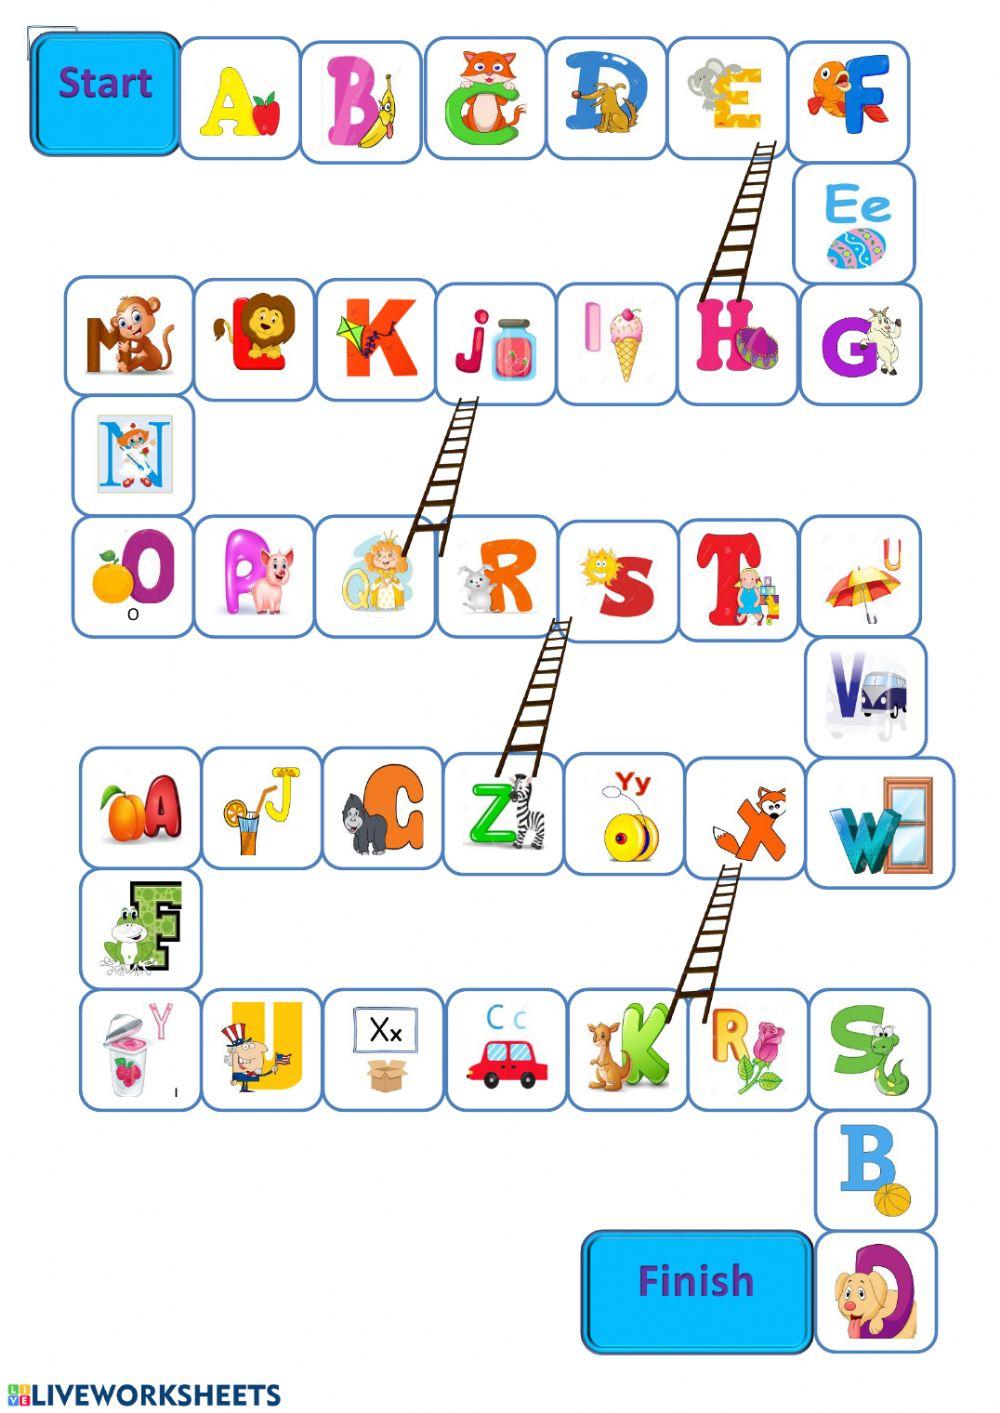 The alphabet game